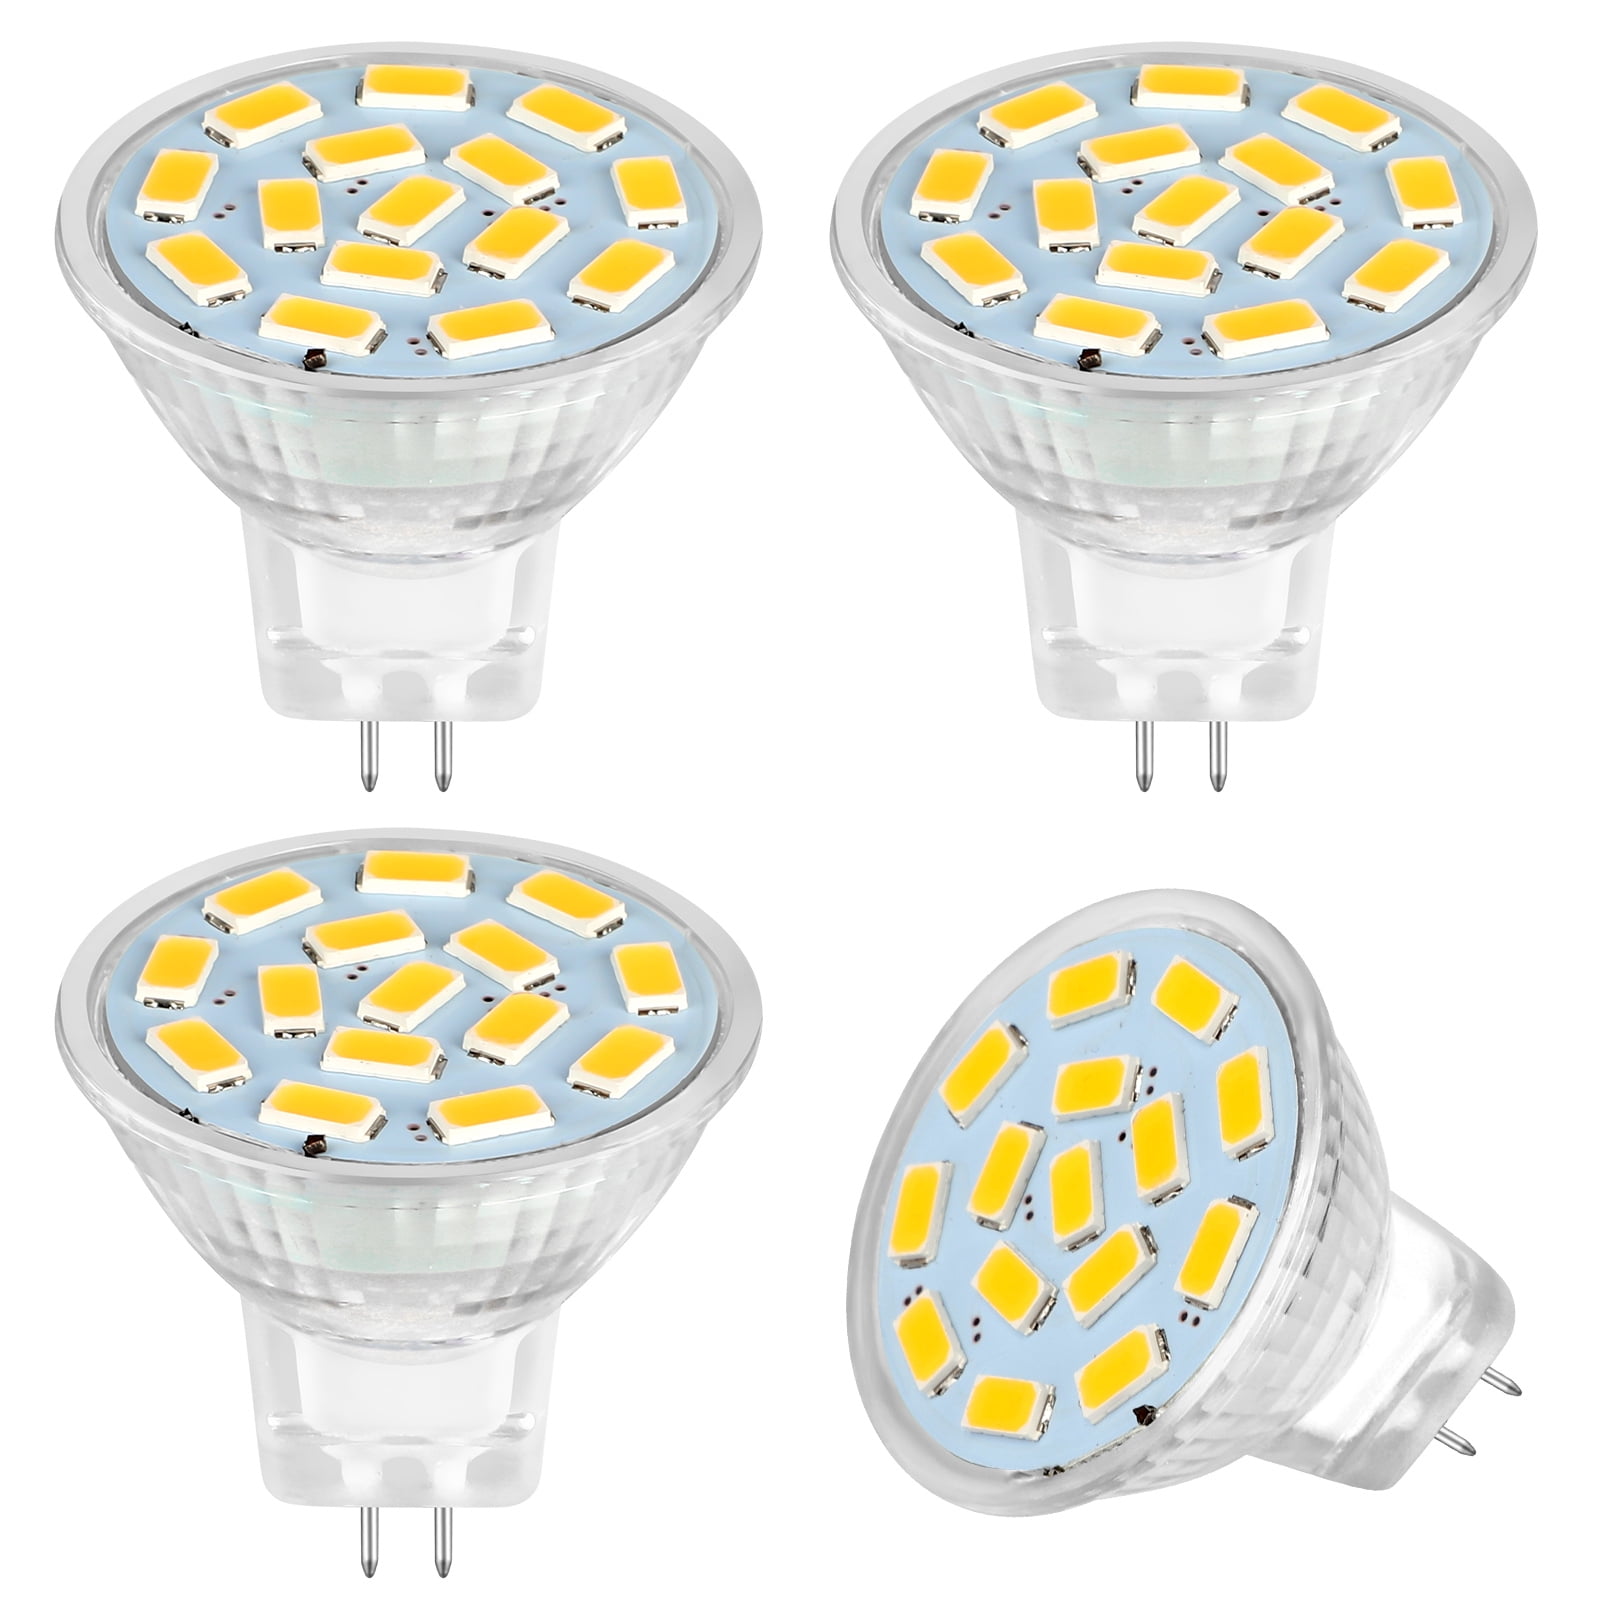 4pcs LED MR11 Light Bulbs, EEEkit 3W 12V LED MR11 Light Bulbs Equivalent to 20W Halogen Bulbs, GU4 Bi-Pin for Landscape Accent Lighting, 3000K Soft White - Walmart.com